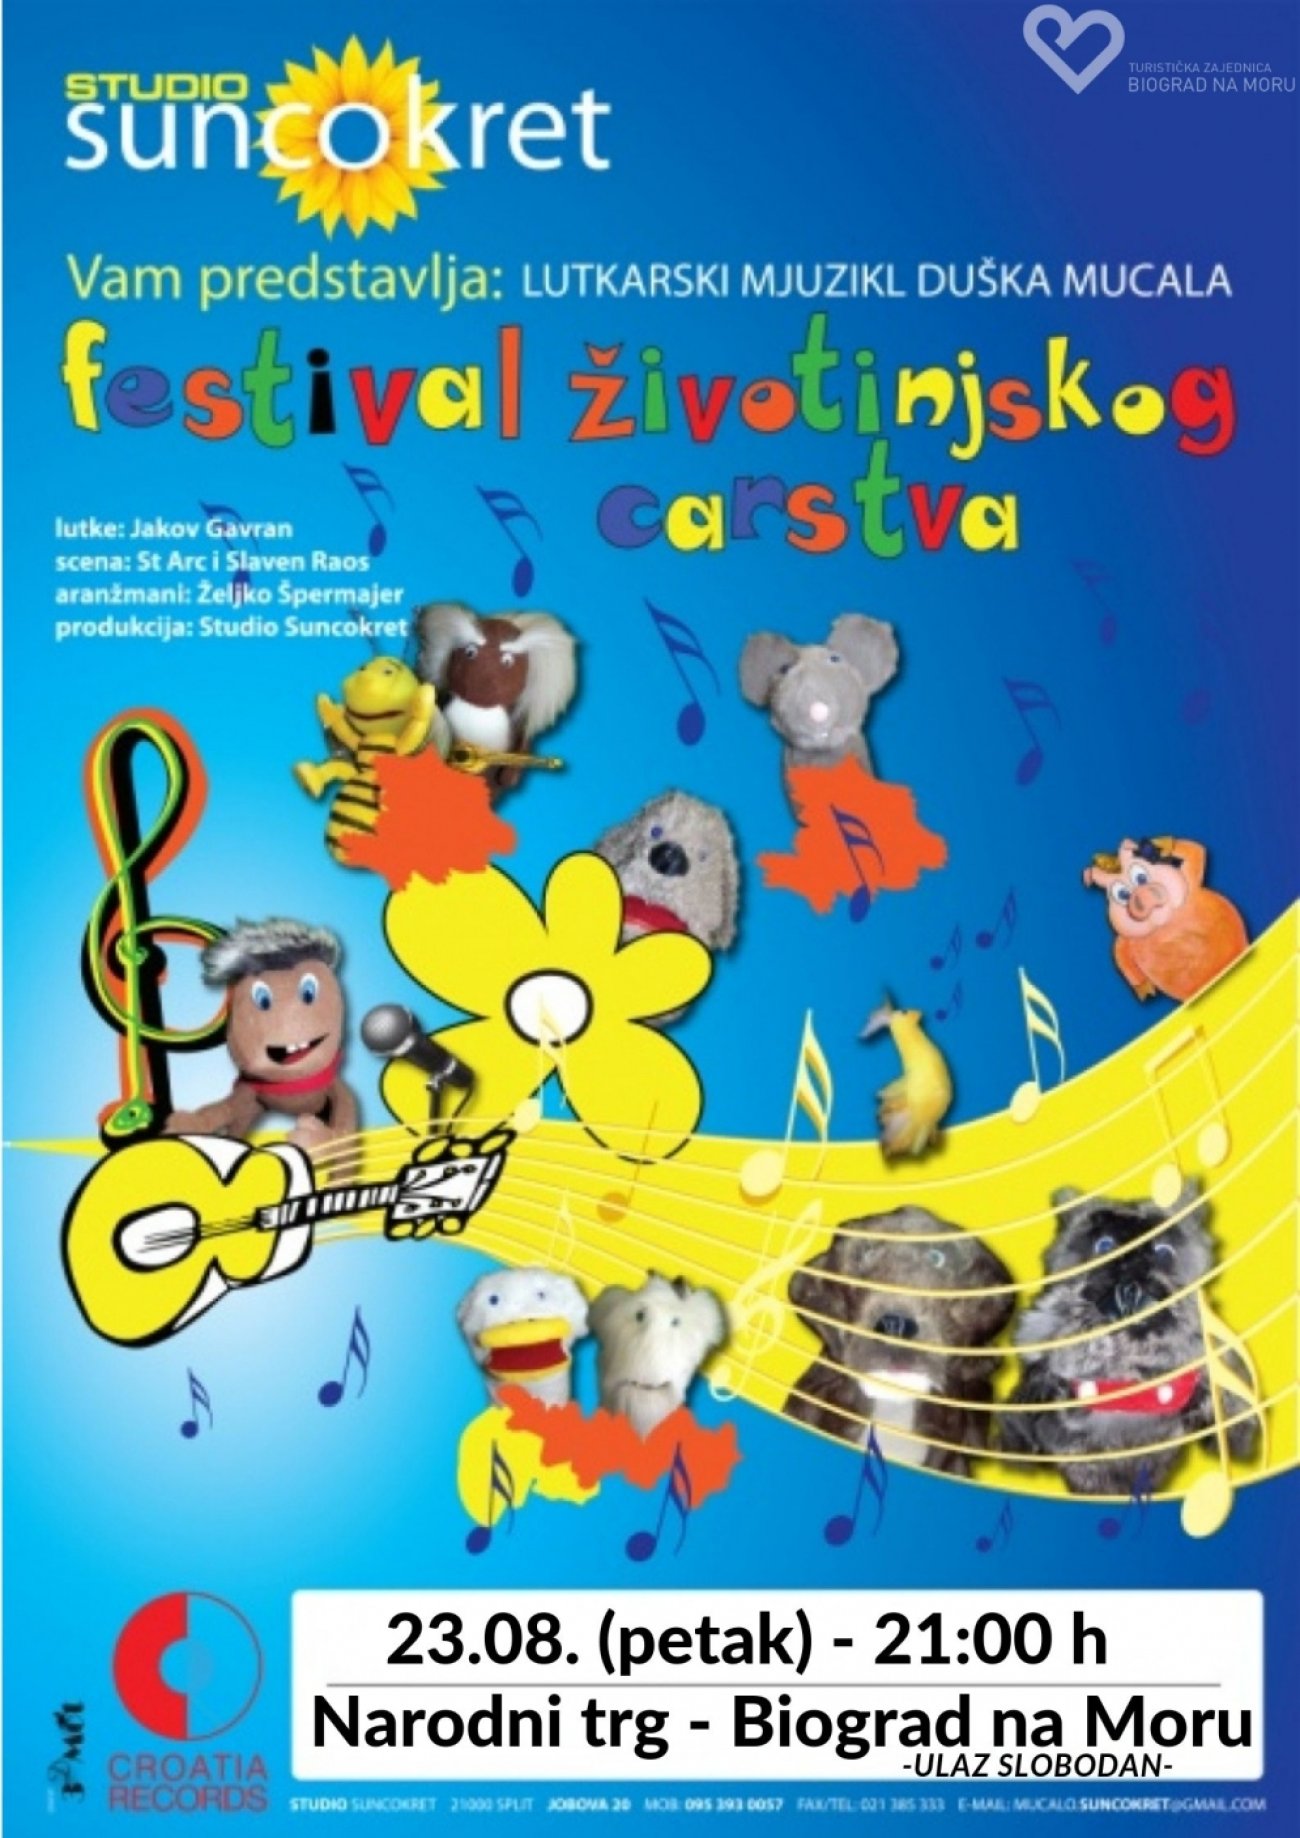 23.08. (petak) u 21 sat na Narodnom trgu (trg Brce) održava se lutkarski mjuzikl &quot;Festival životinjskog carstva&quot;